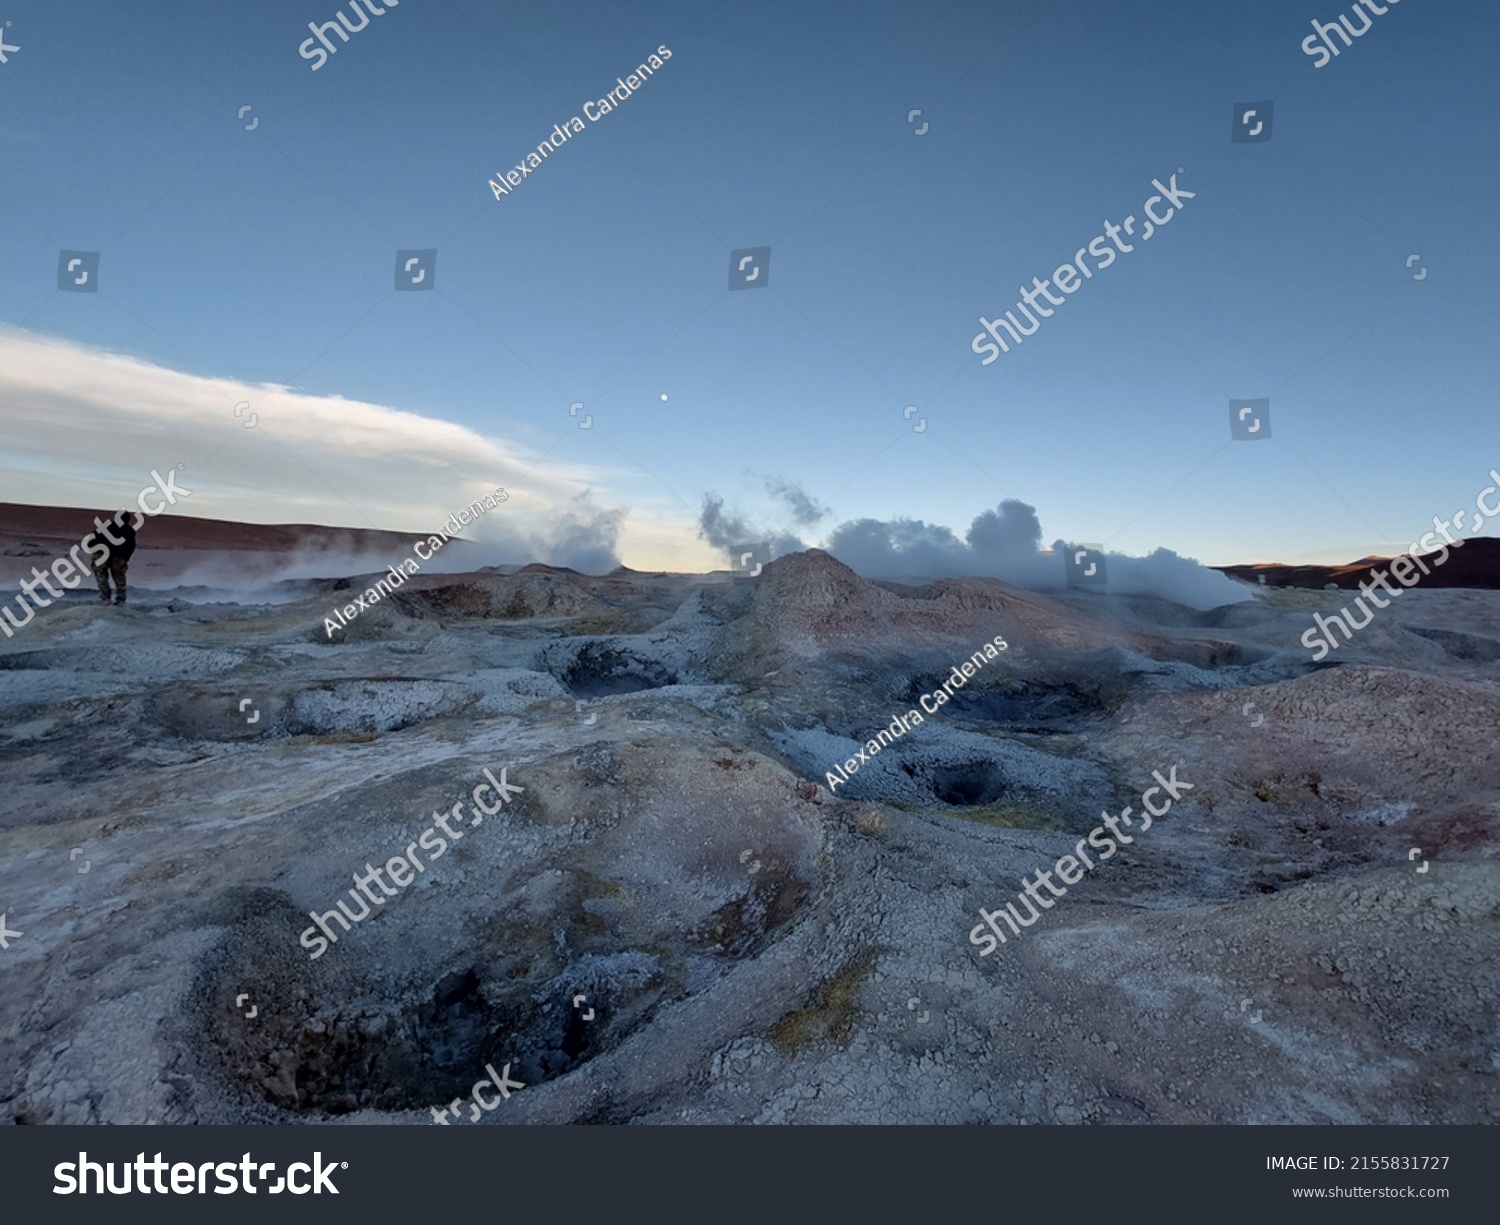 Morning sun Geyser (Sol de Mañana Geyser) (geothermal and eruption area) in Eduardo Avaroa National Reserve (Bolivia) #2155831727